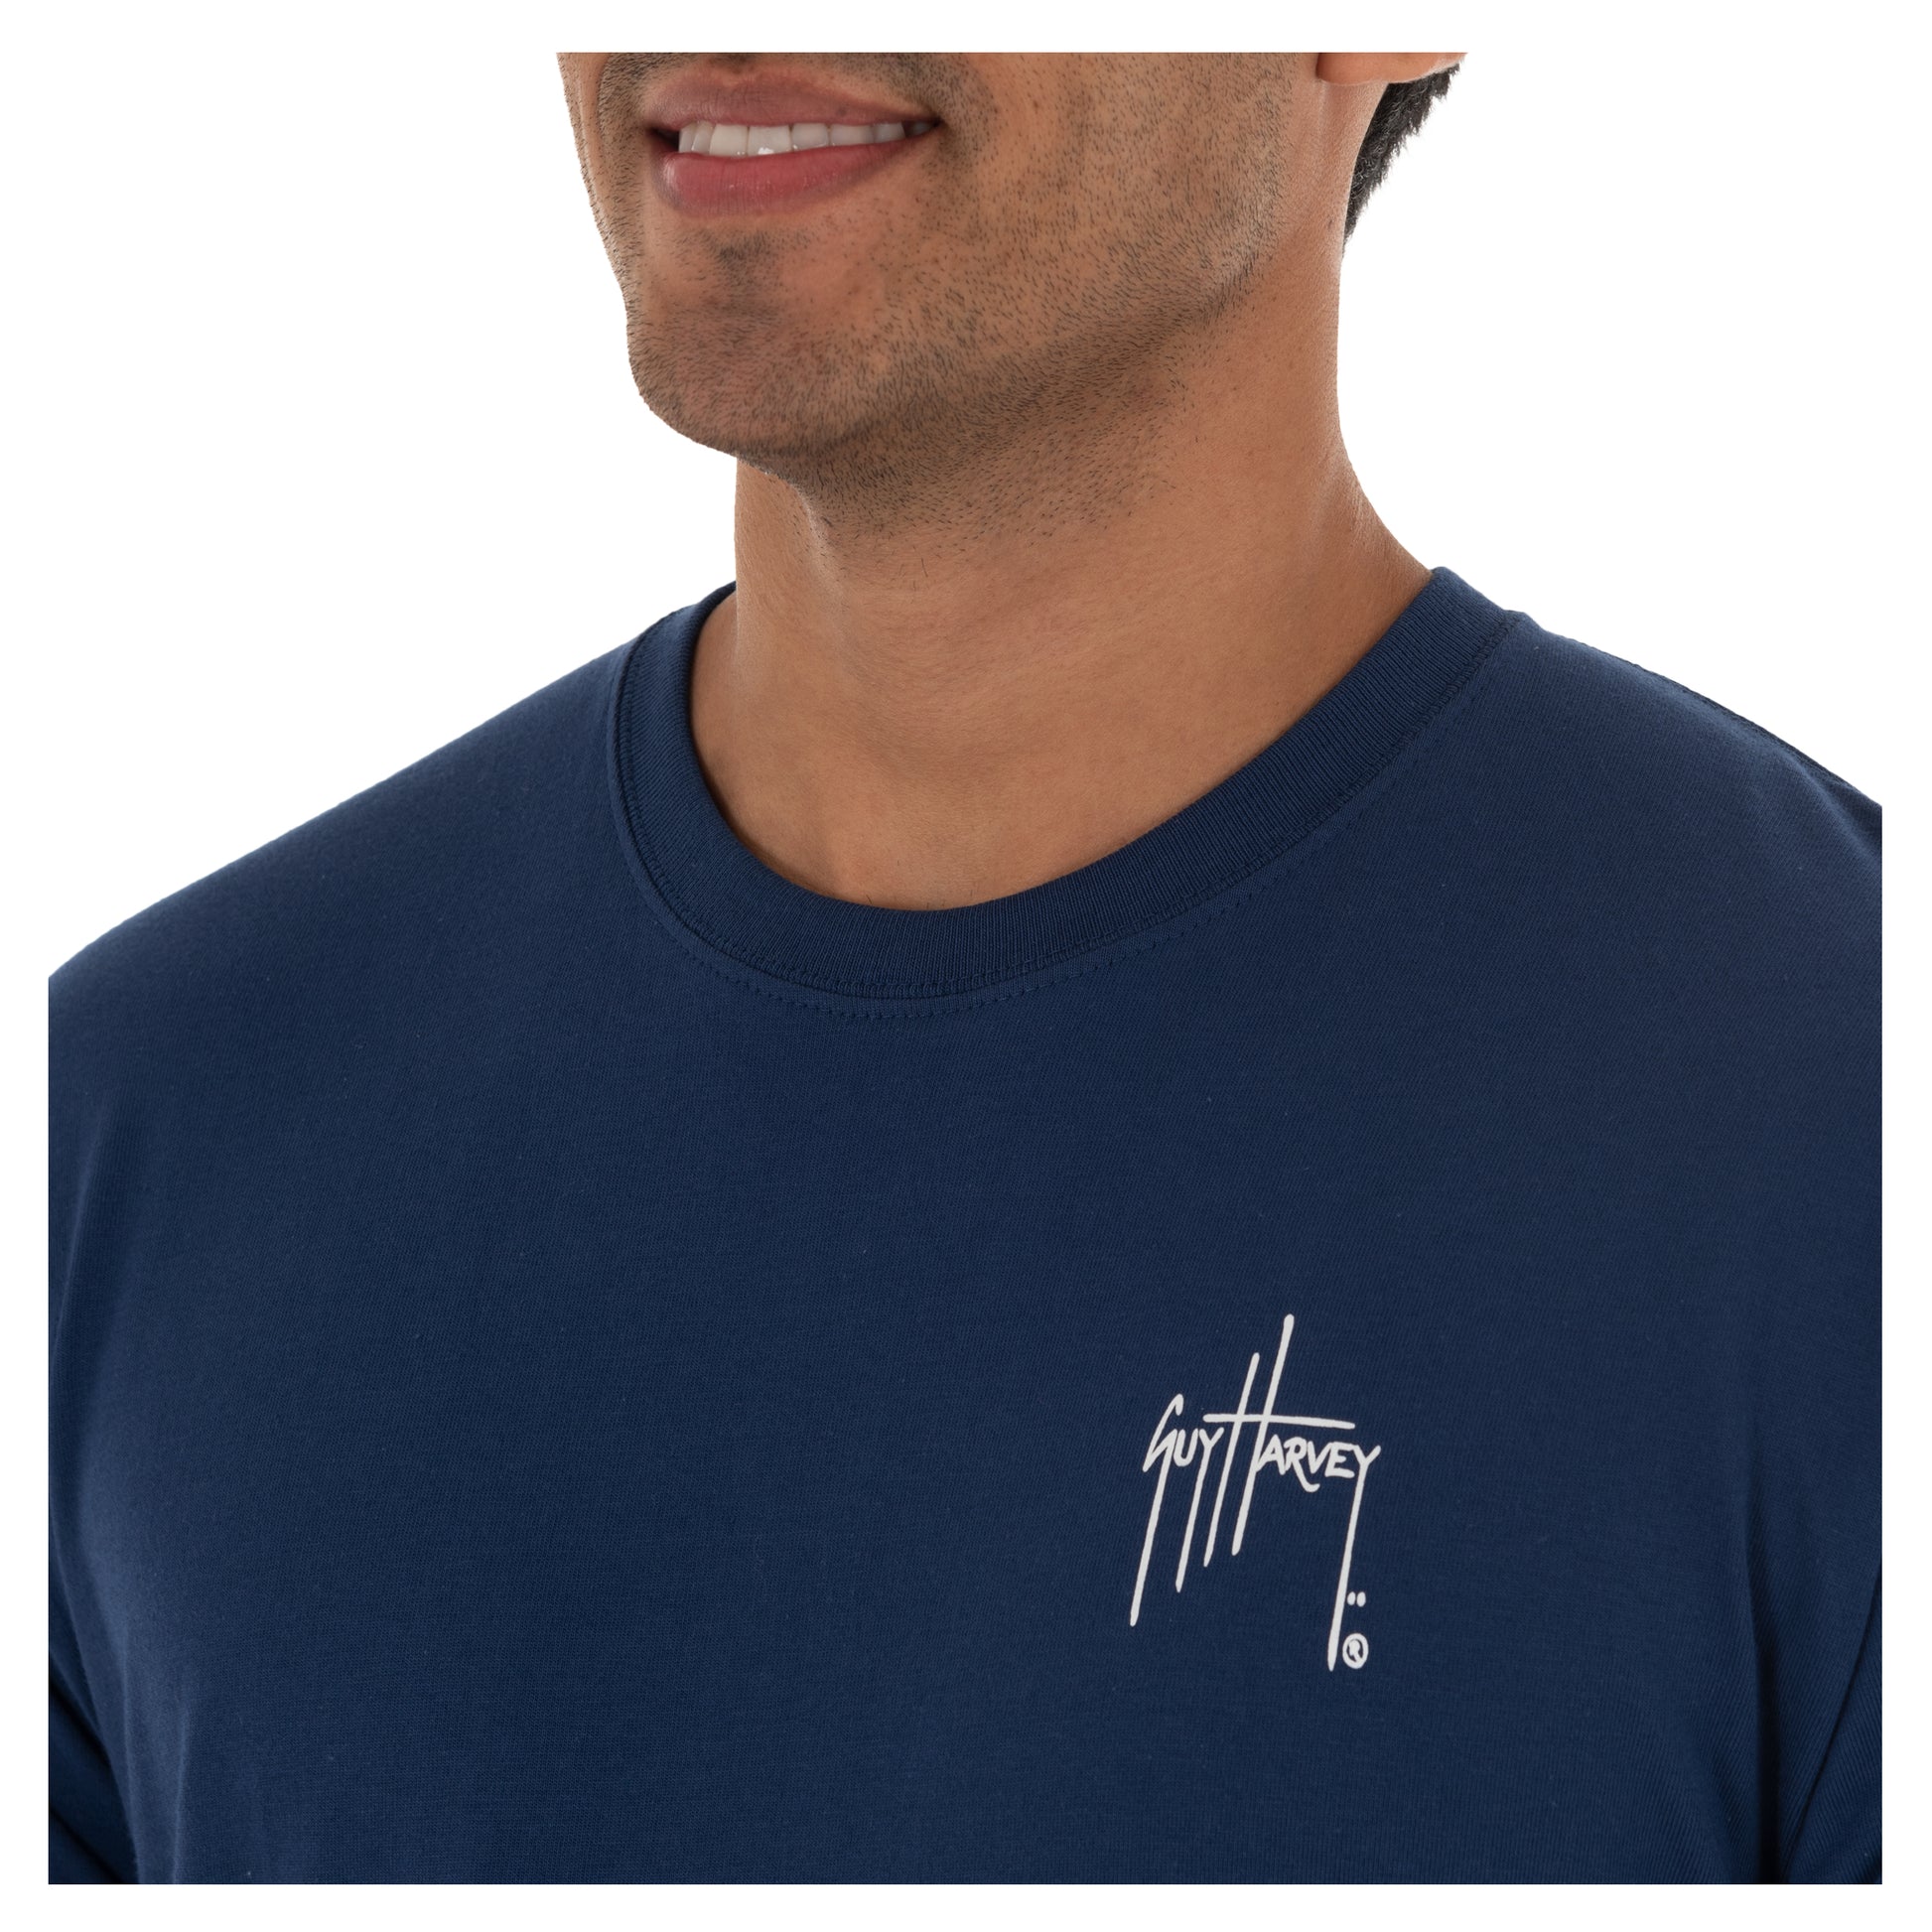 Guy Harvey | Men's Florida Mahi Short Sleeve Pocket Blue T-Shirt, Medium